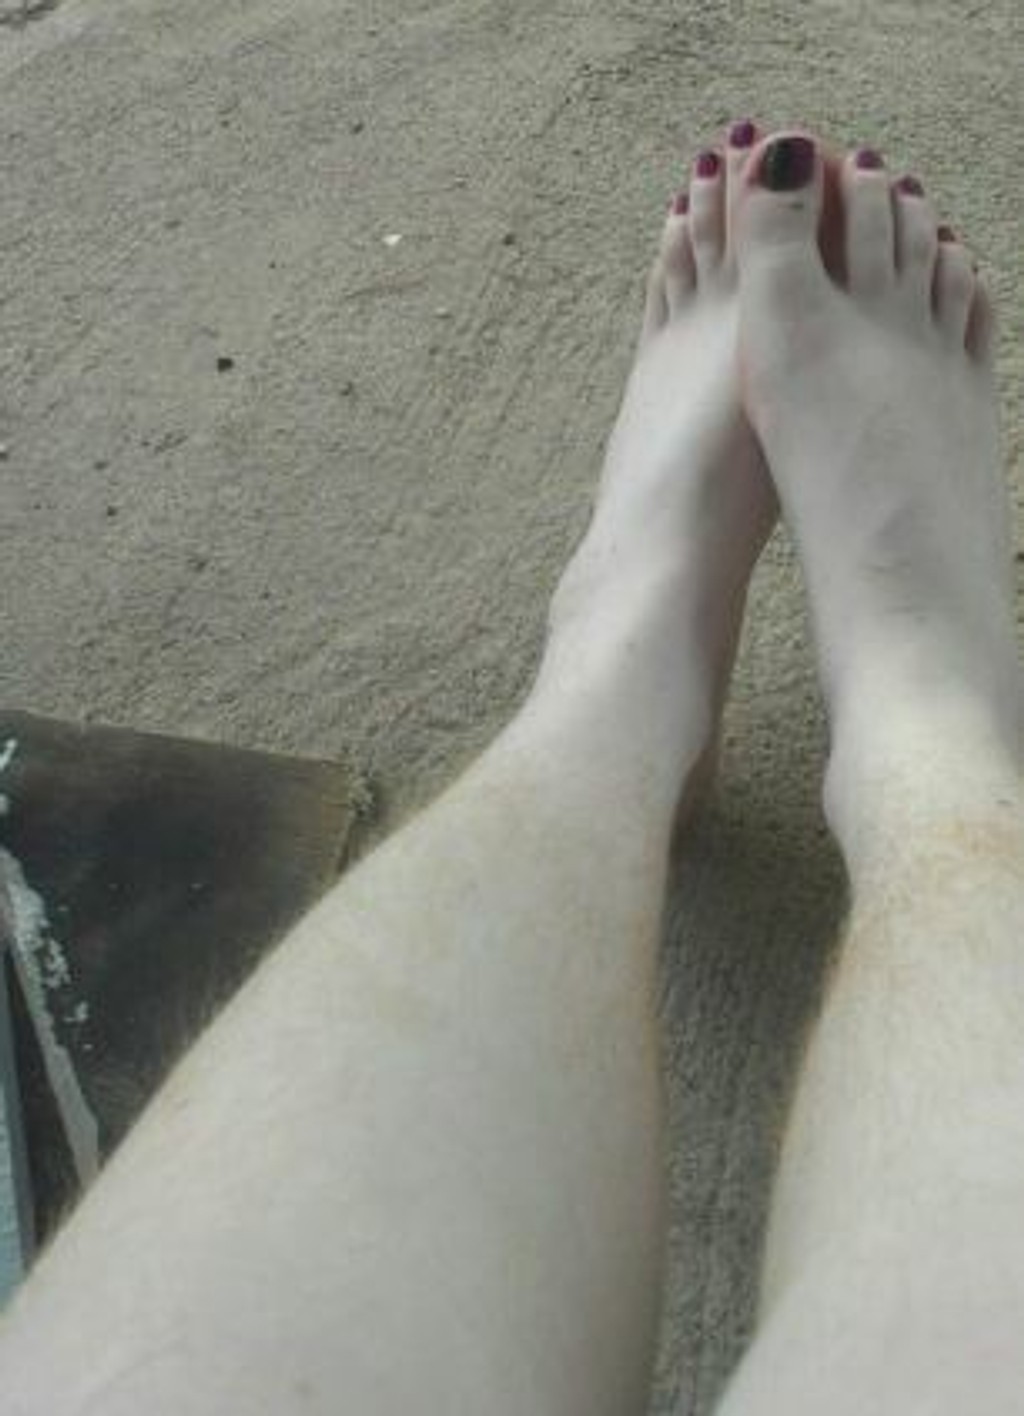 Сильно волосатые ноги. Не биитые женские ноги. Женские воло атые ноги. Женские не бритый ноги. Волосатые женские ножки.